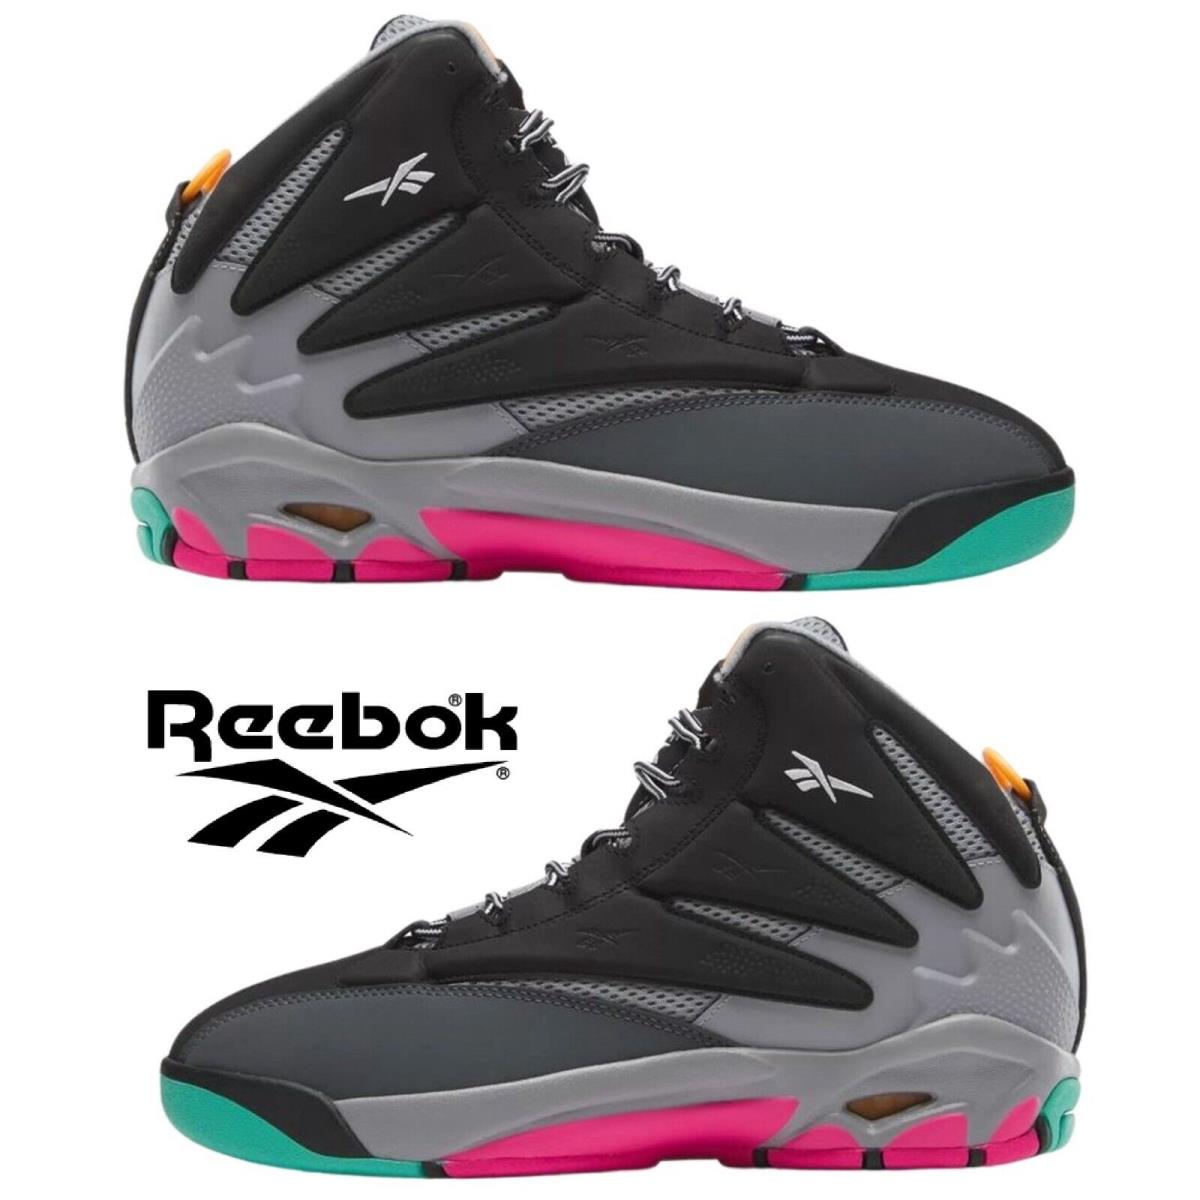 Reebok The Blast Basketball Shoes Men`s Sneakers Running Casual Sport Retro